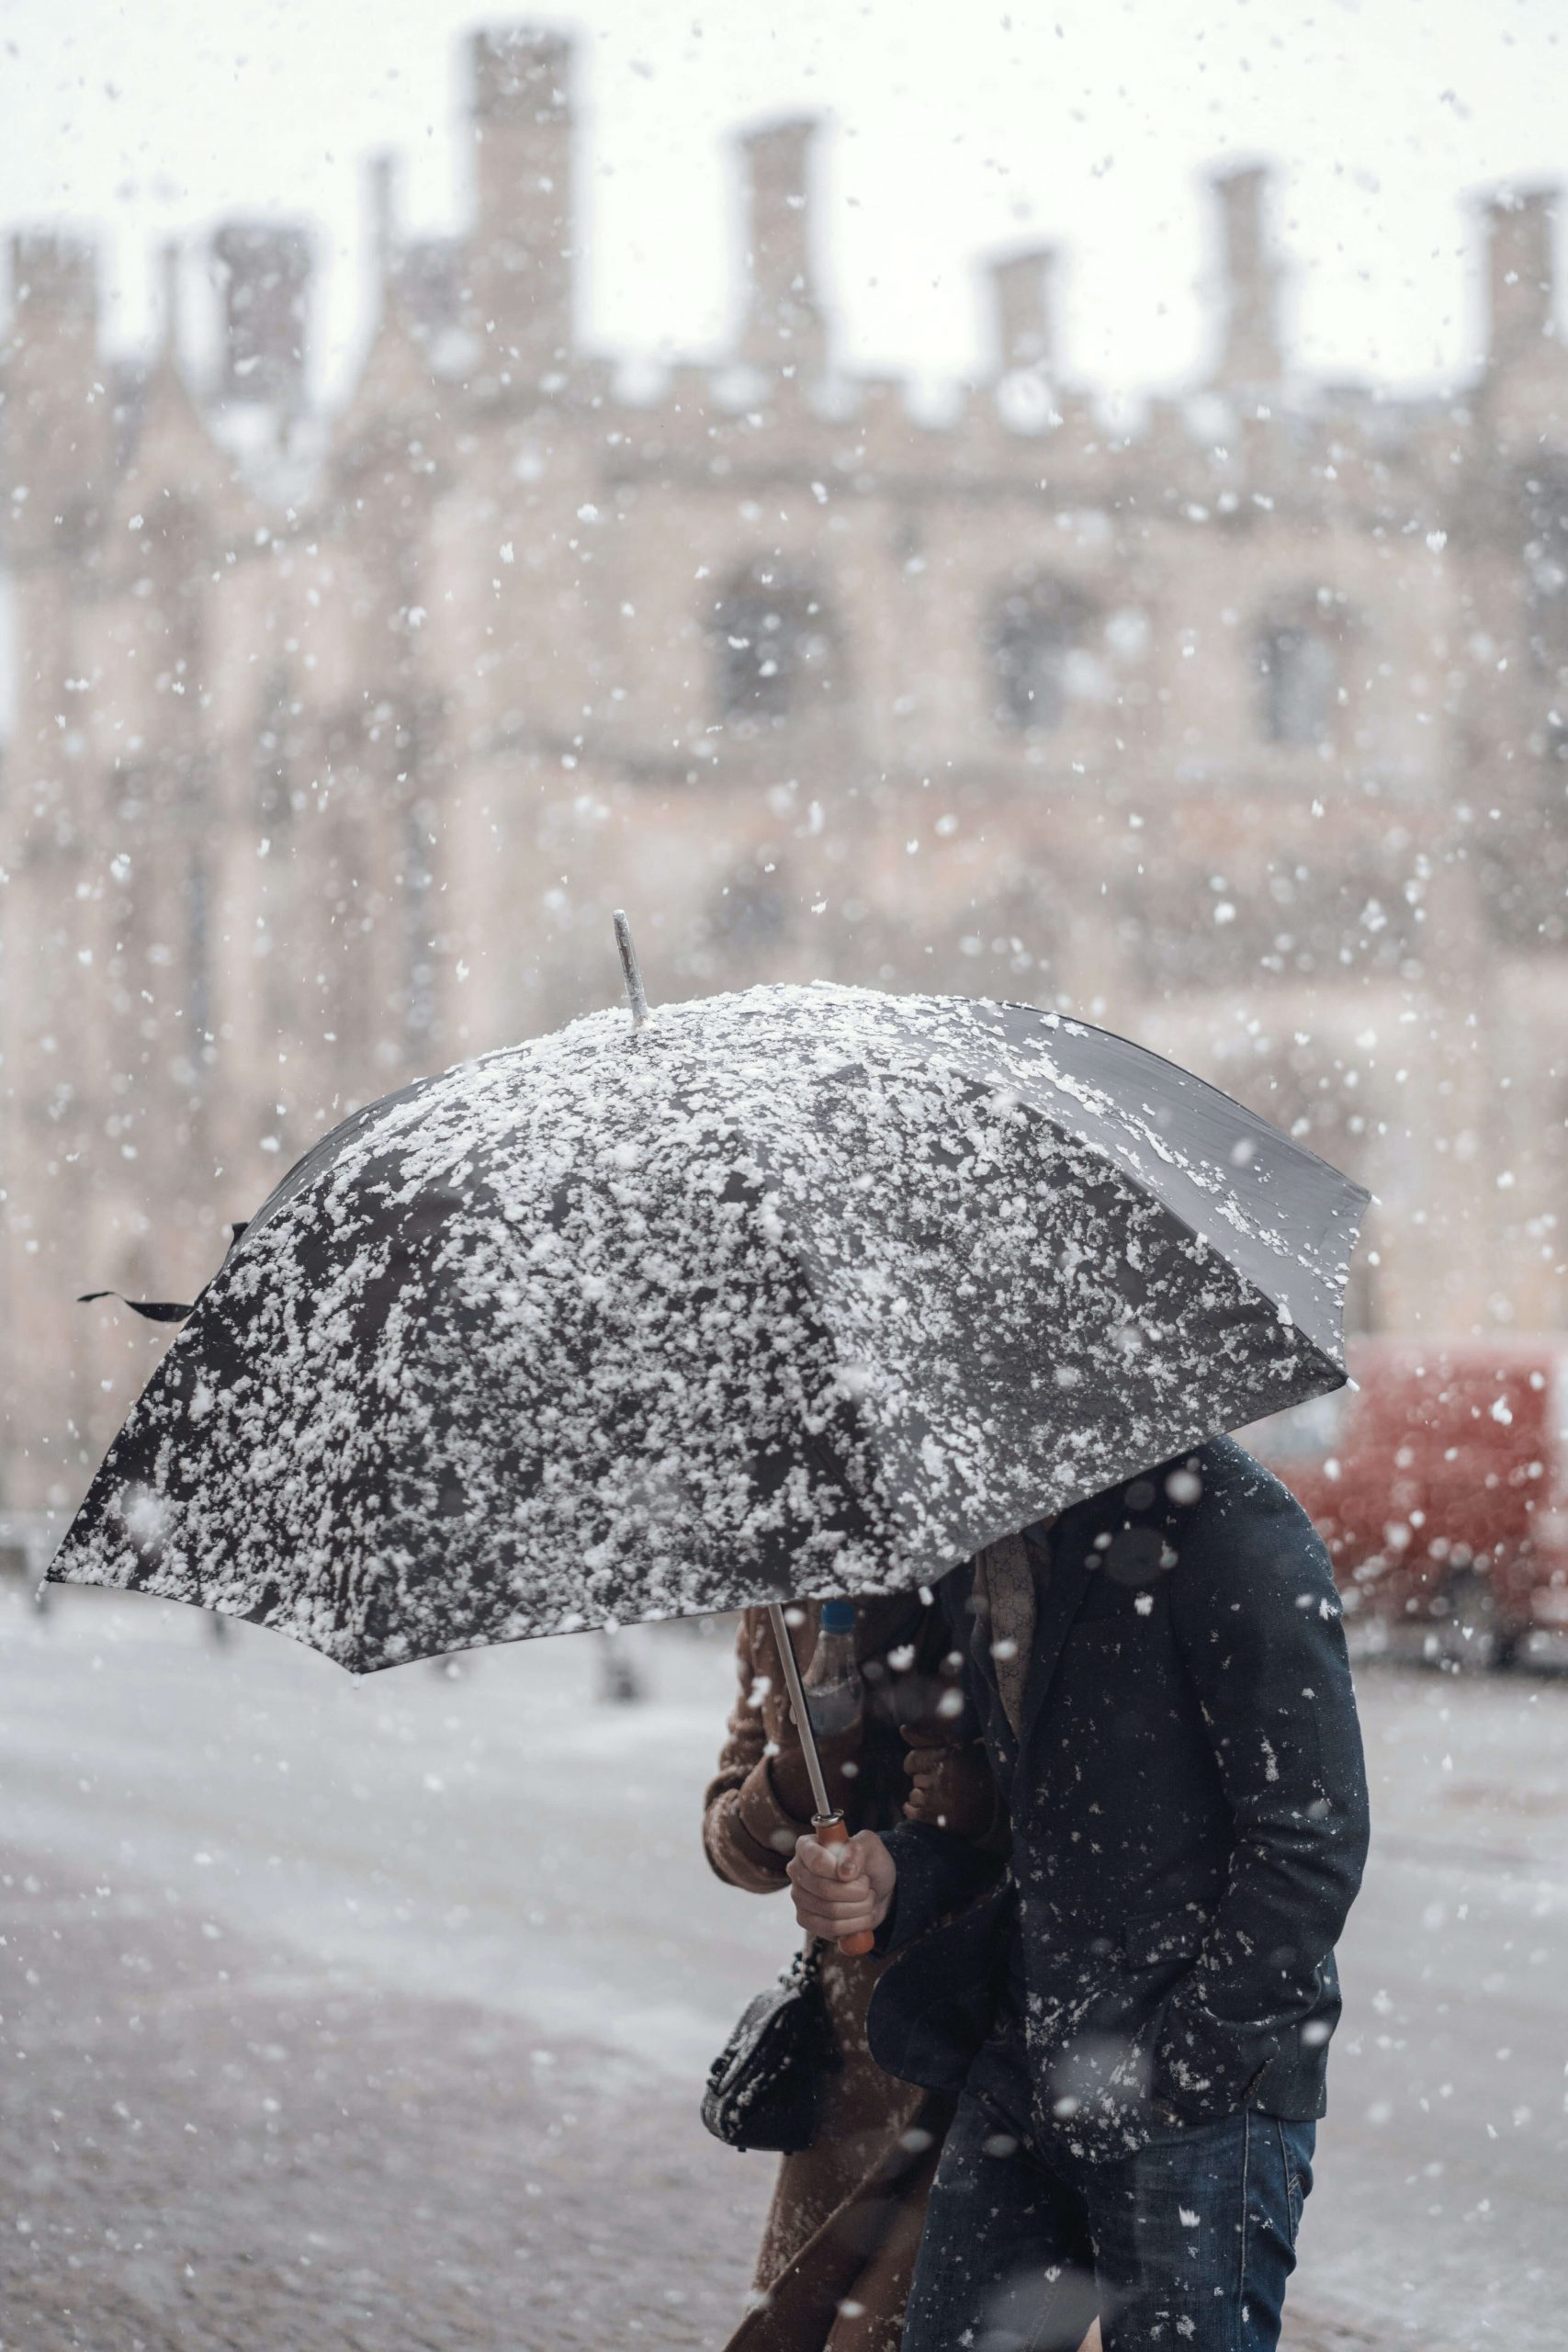 person walking through snow holding umbrella